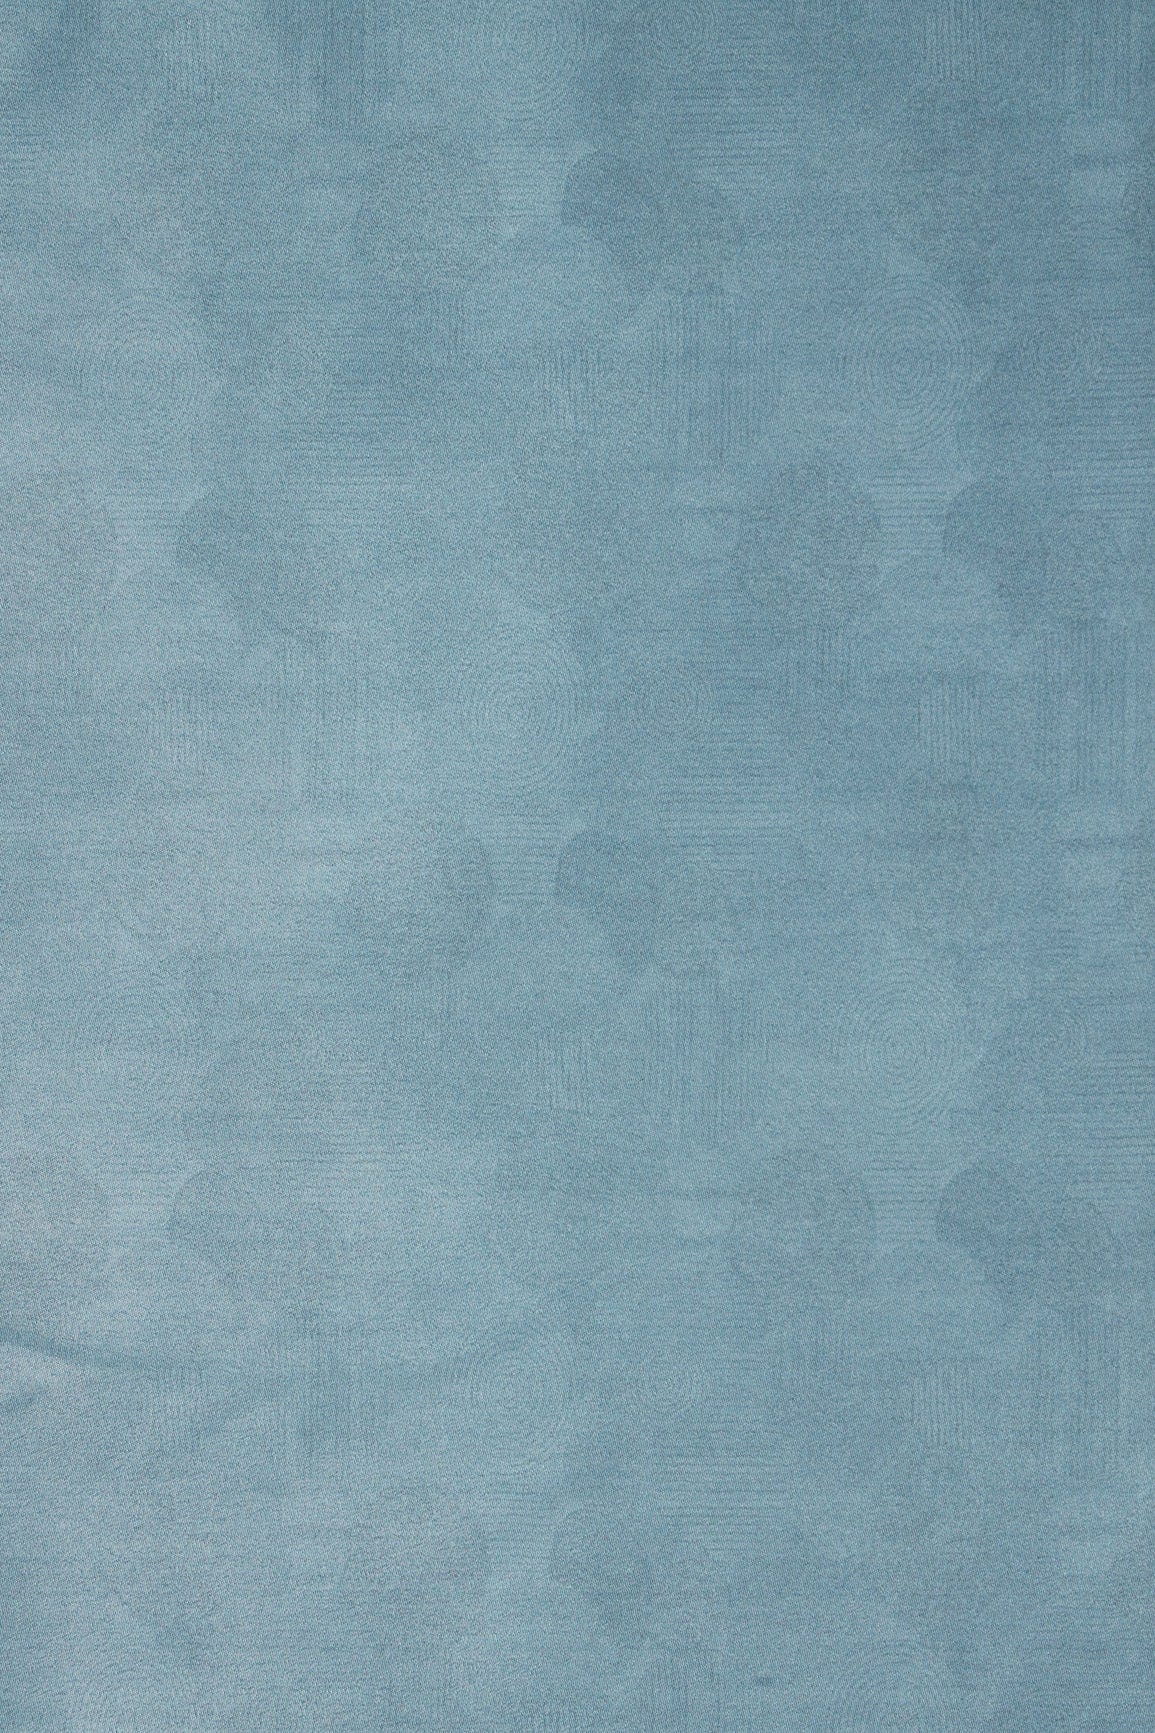 doeraa Prints Pastel Blue Texture Pattern Digital Print On French Crepe Fabric